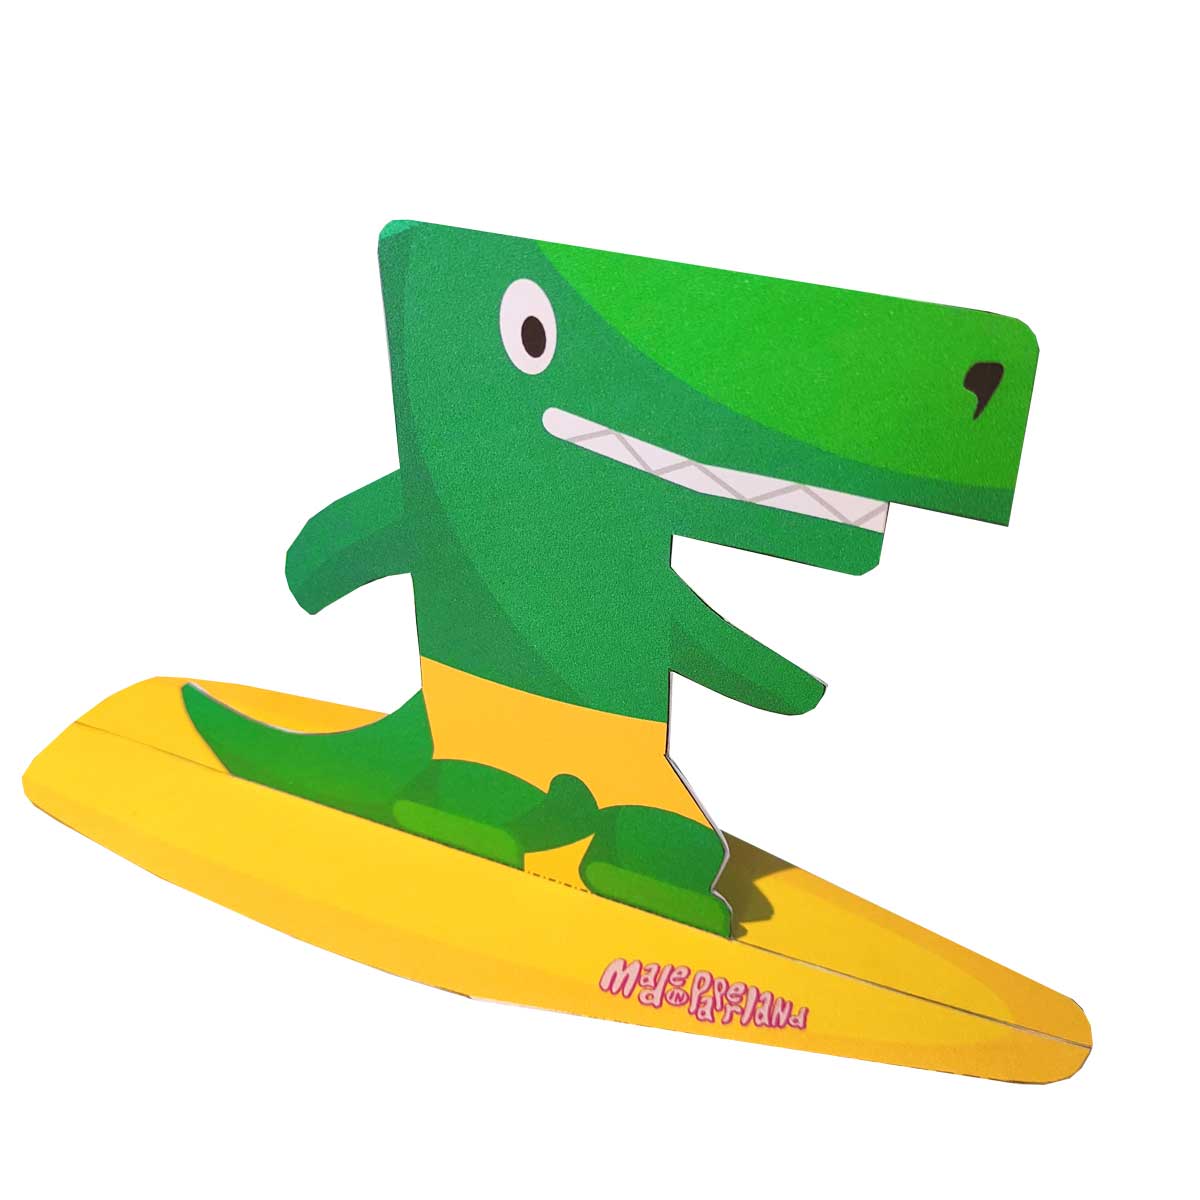 Crocodile Surfer paper model